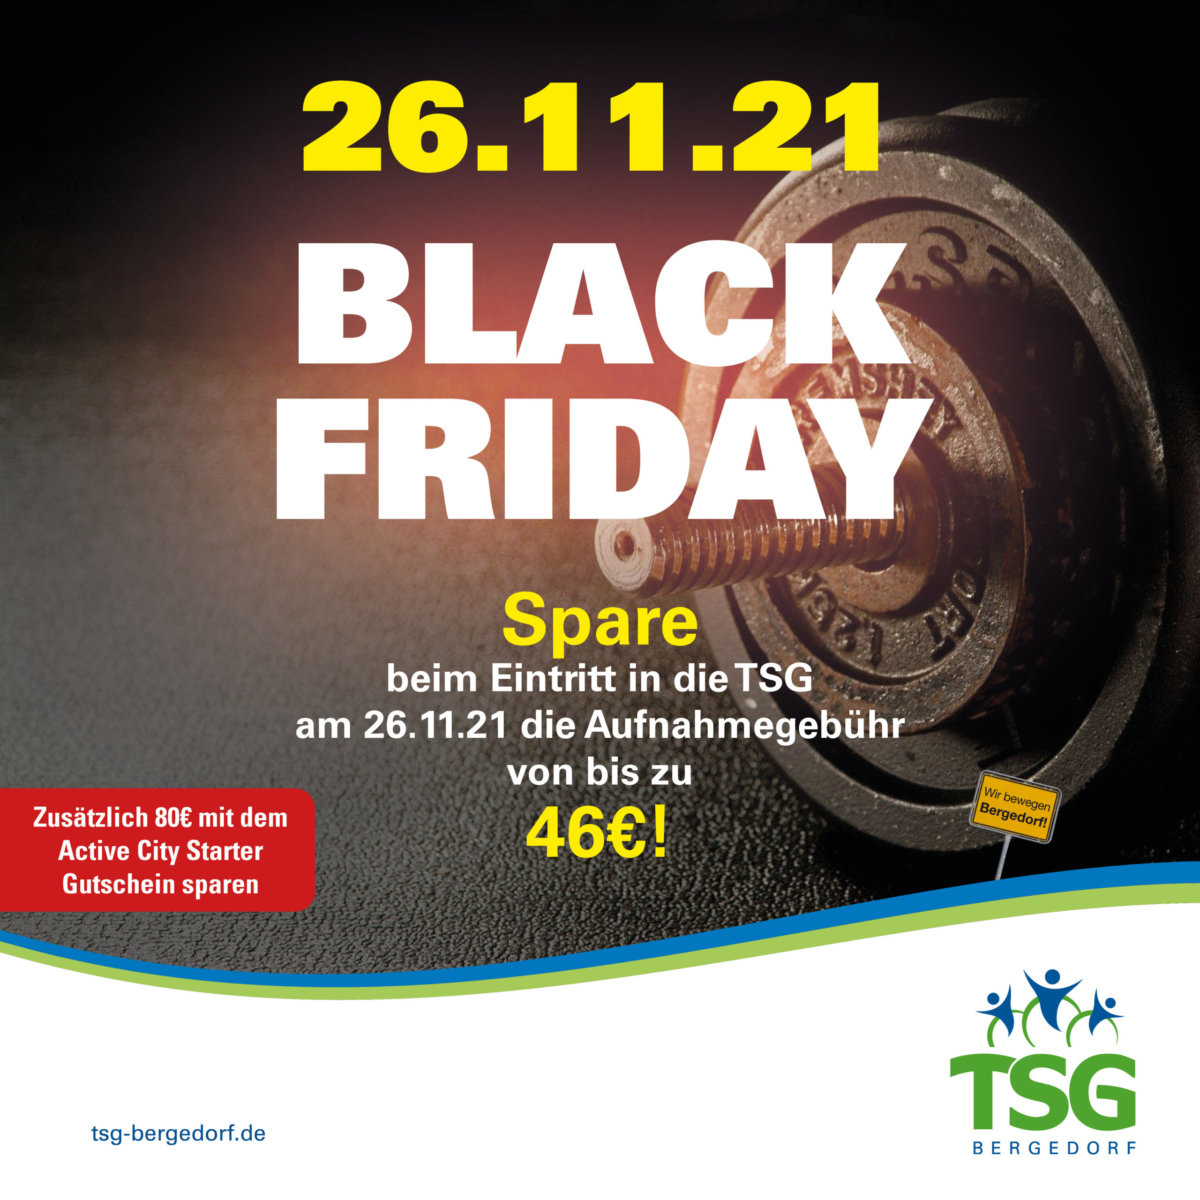 Black Friday Deal bei der TSG Bergedorf